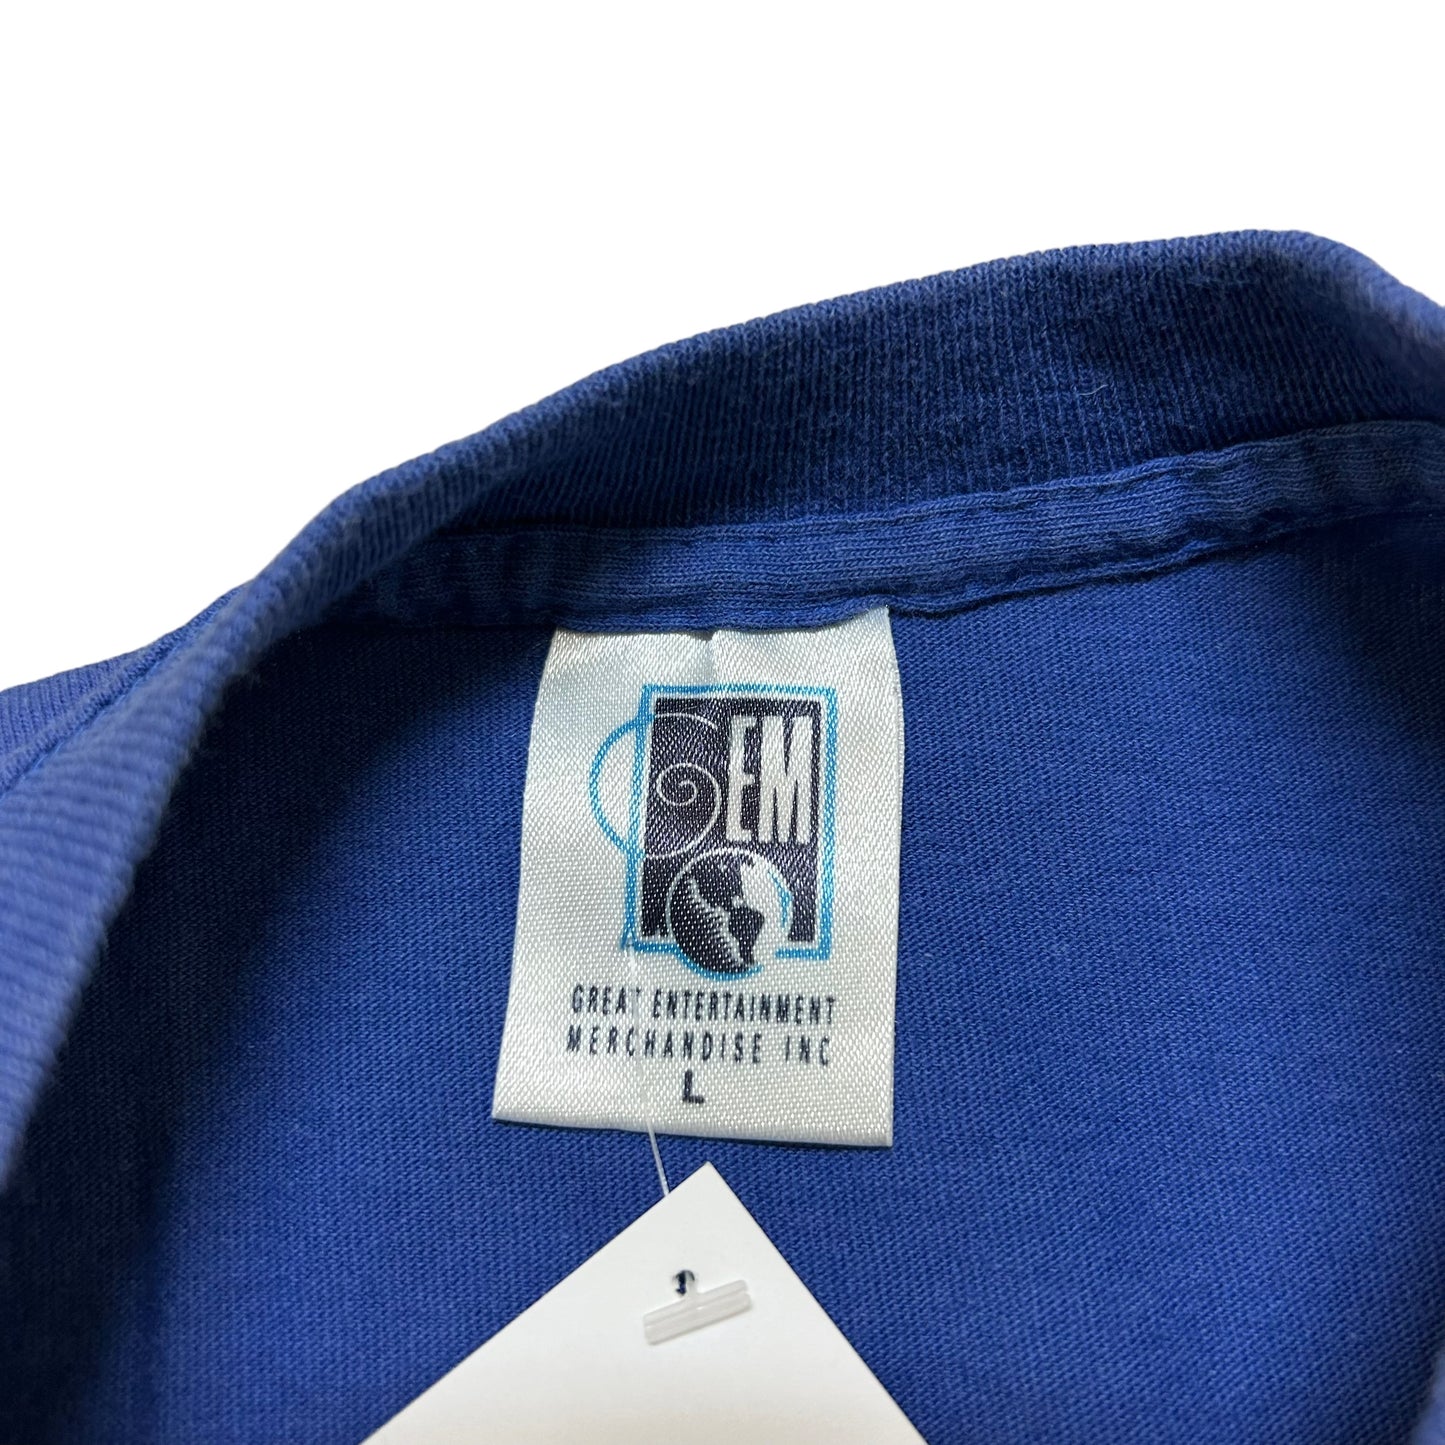 Vintage 1990s Star Trek Blue Long Sleeve Graphic T-Shirt - Size Large